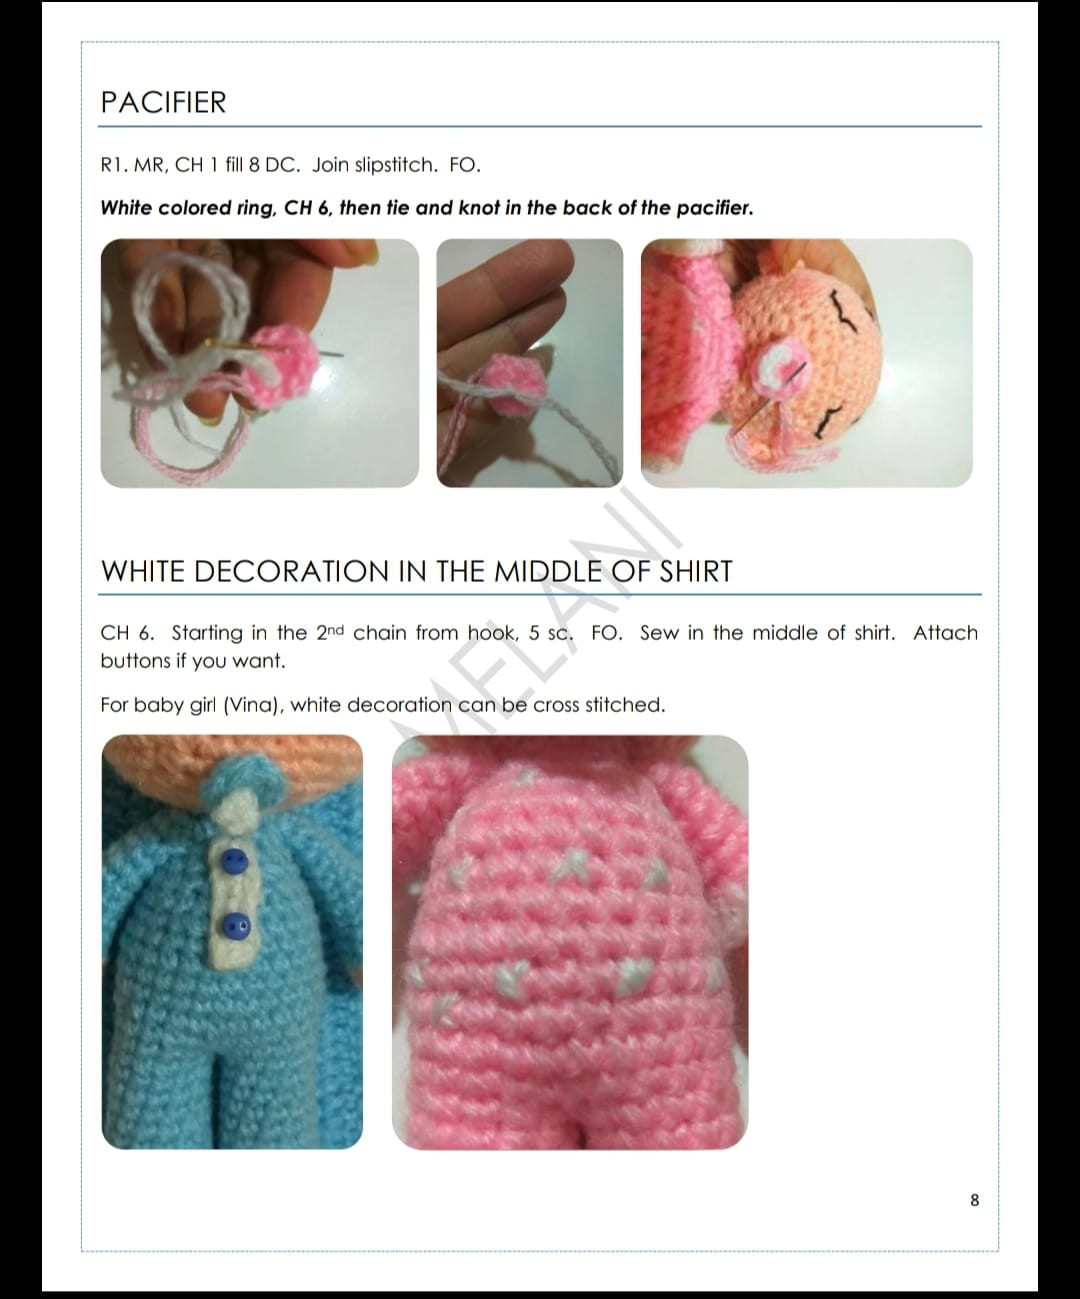 baby twins vina & vino crochet pattern